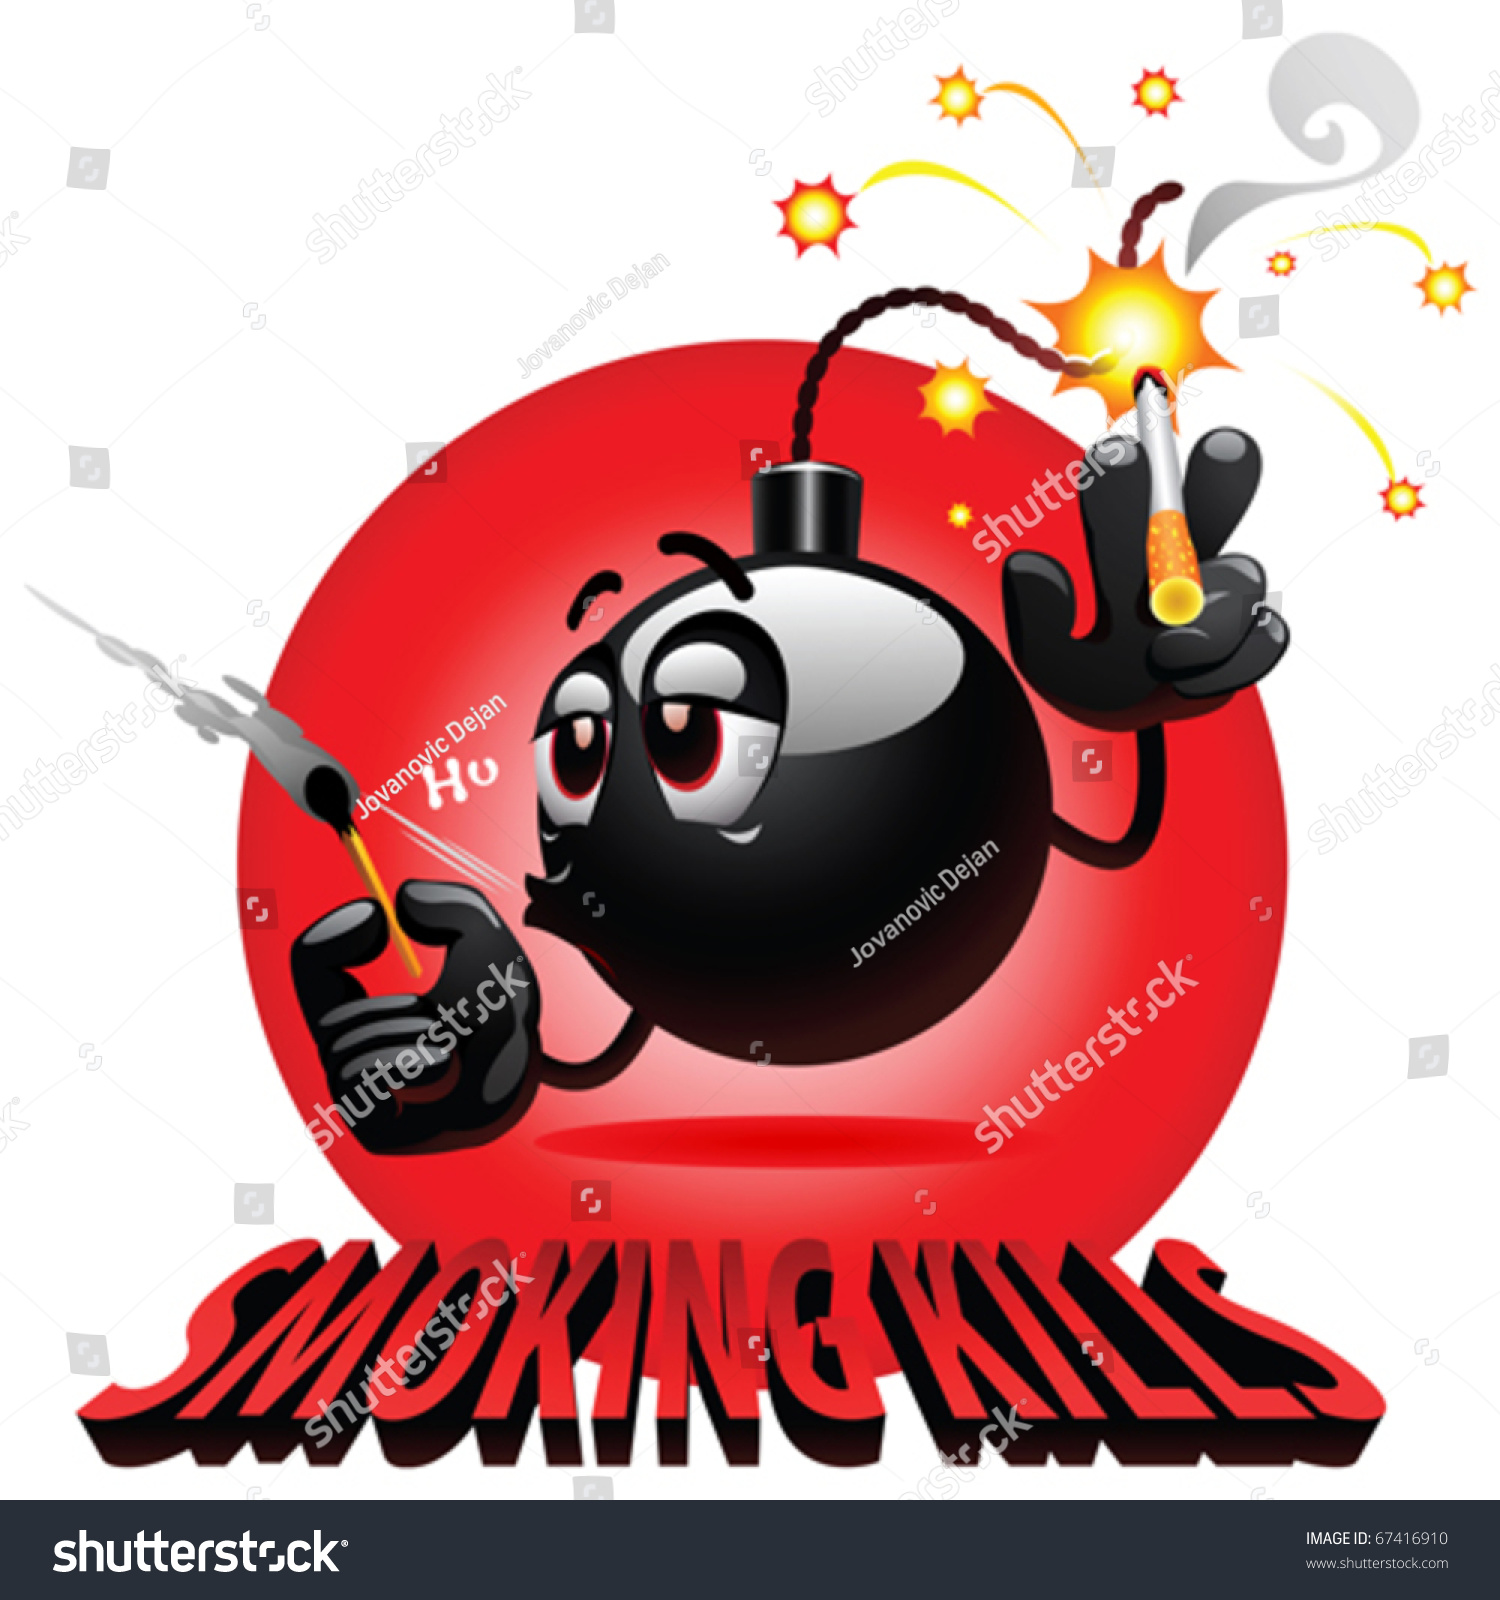 stock-vector-smiley-bomb-smoking-cigarette-67416910.jpg